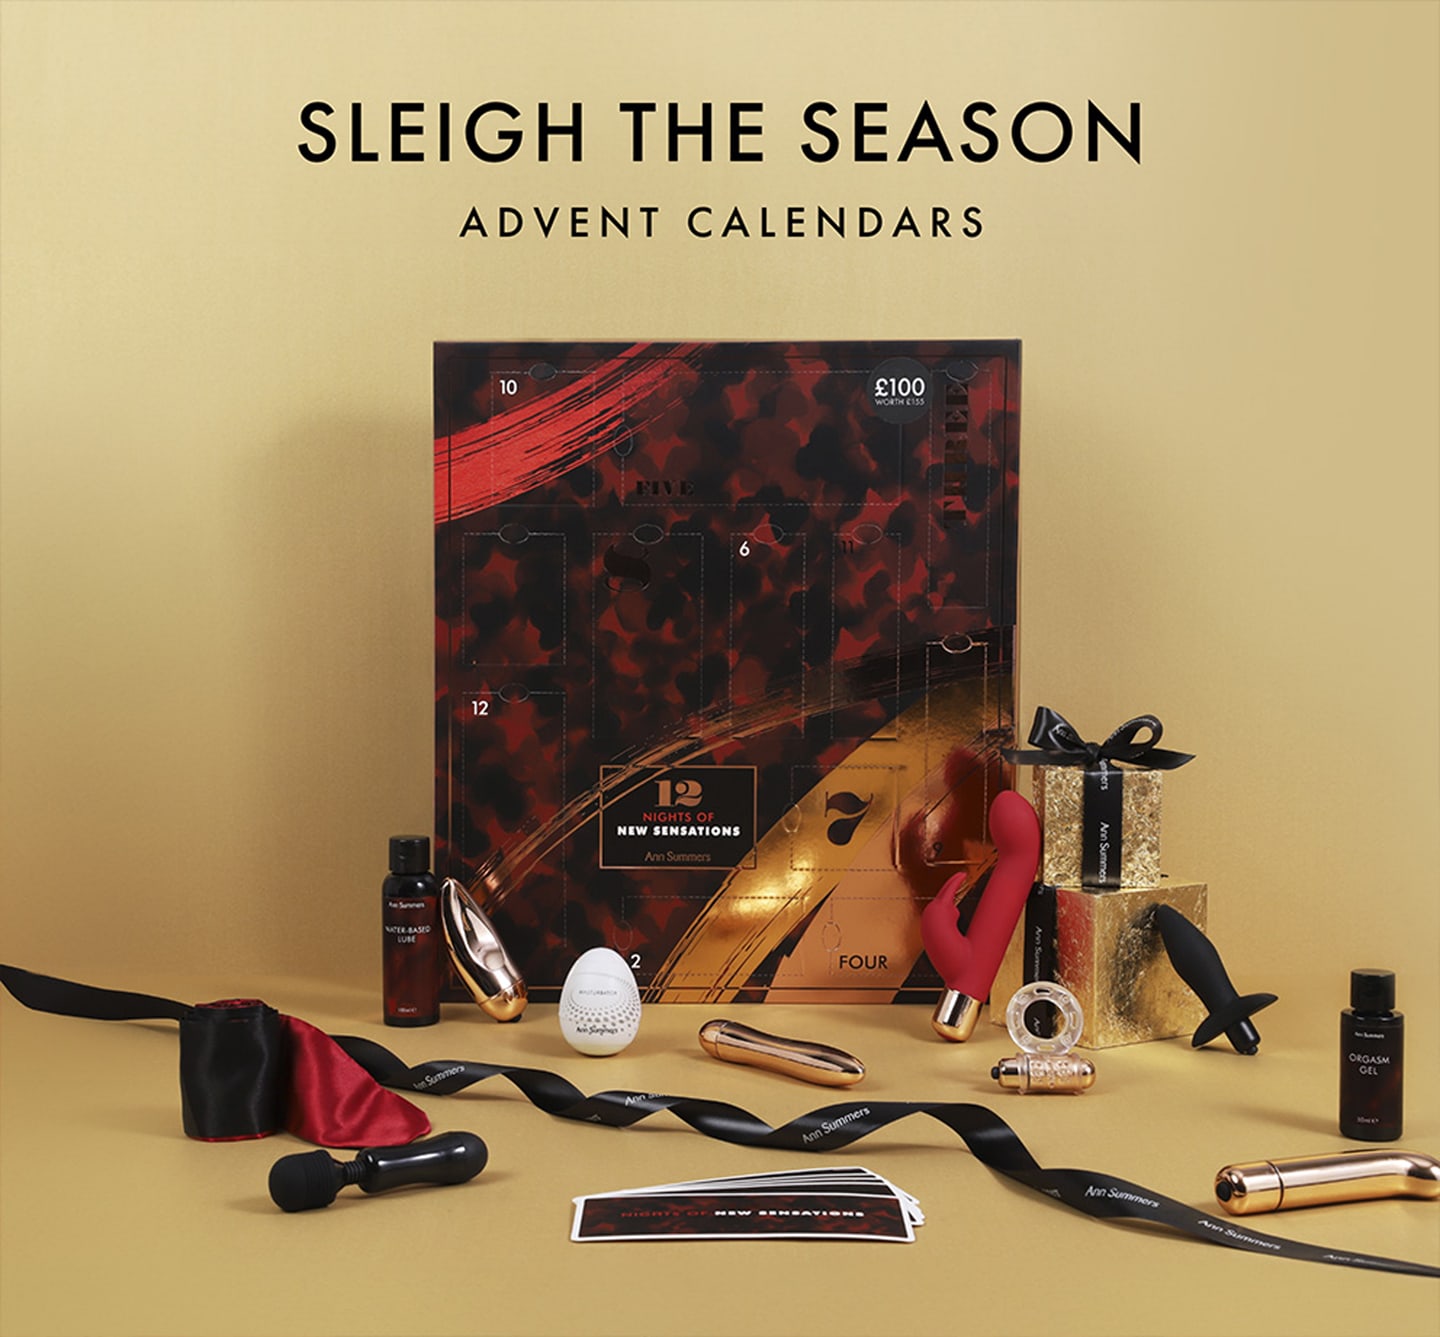 advent calendars